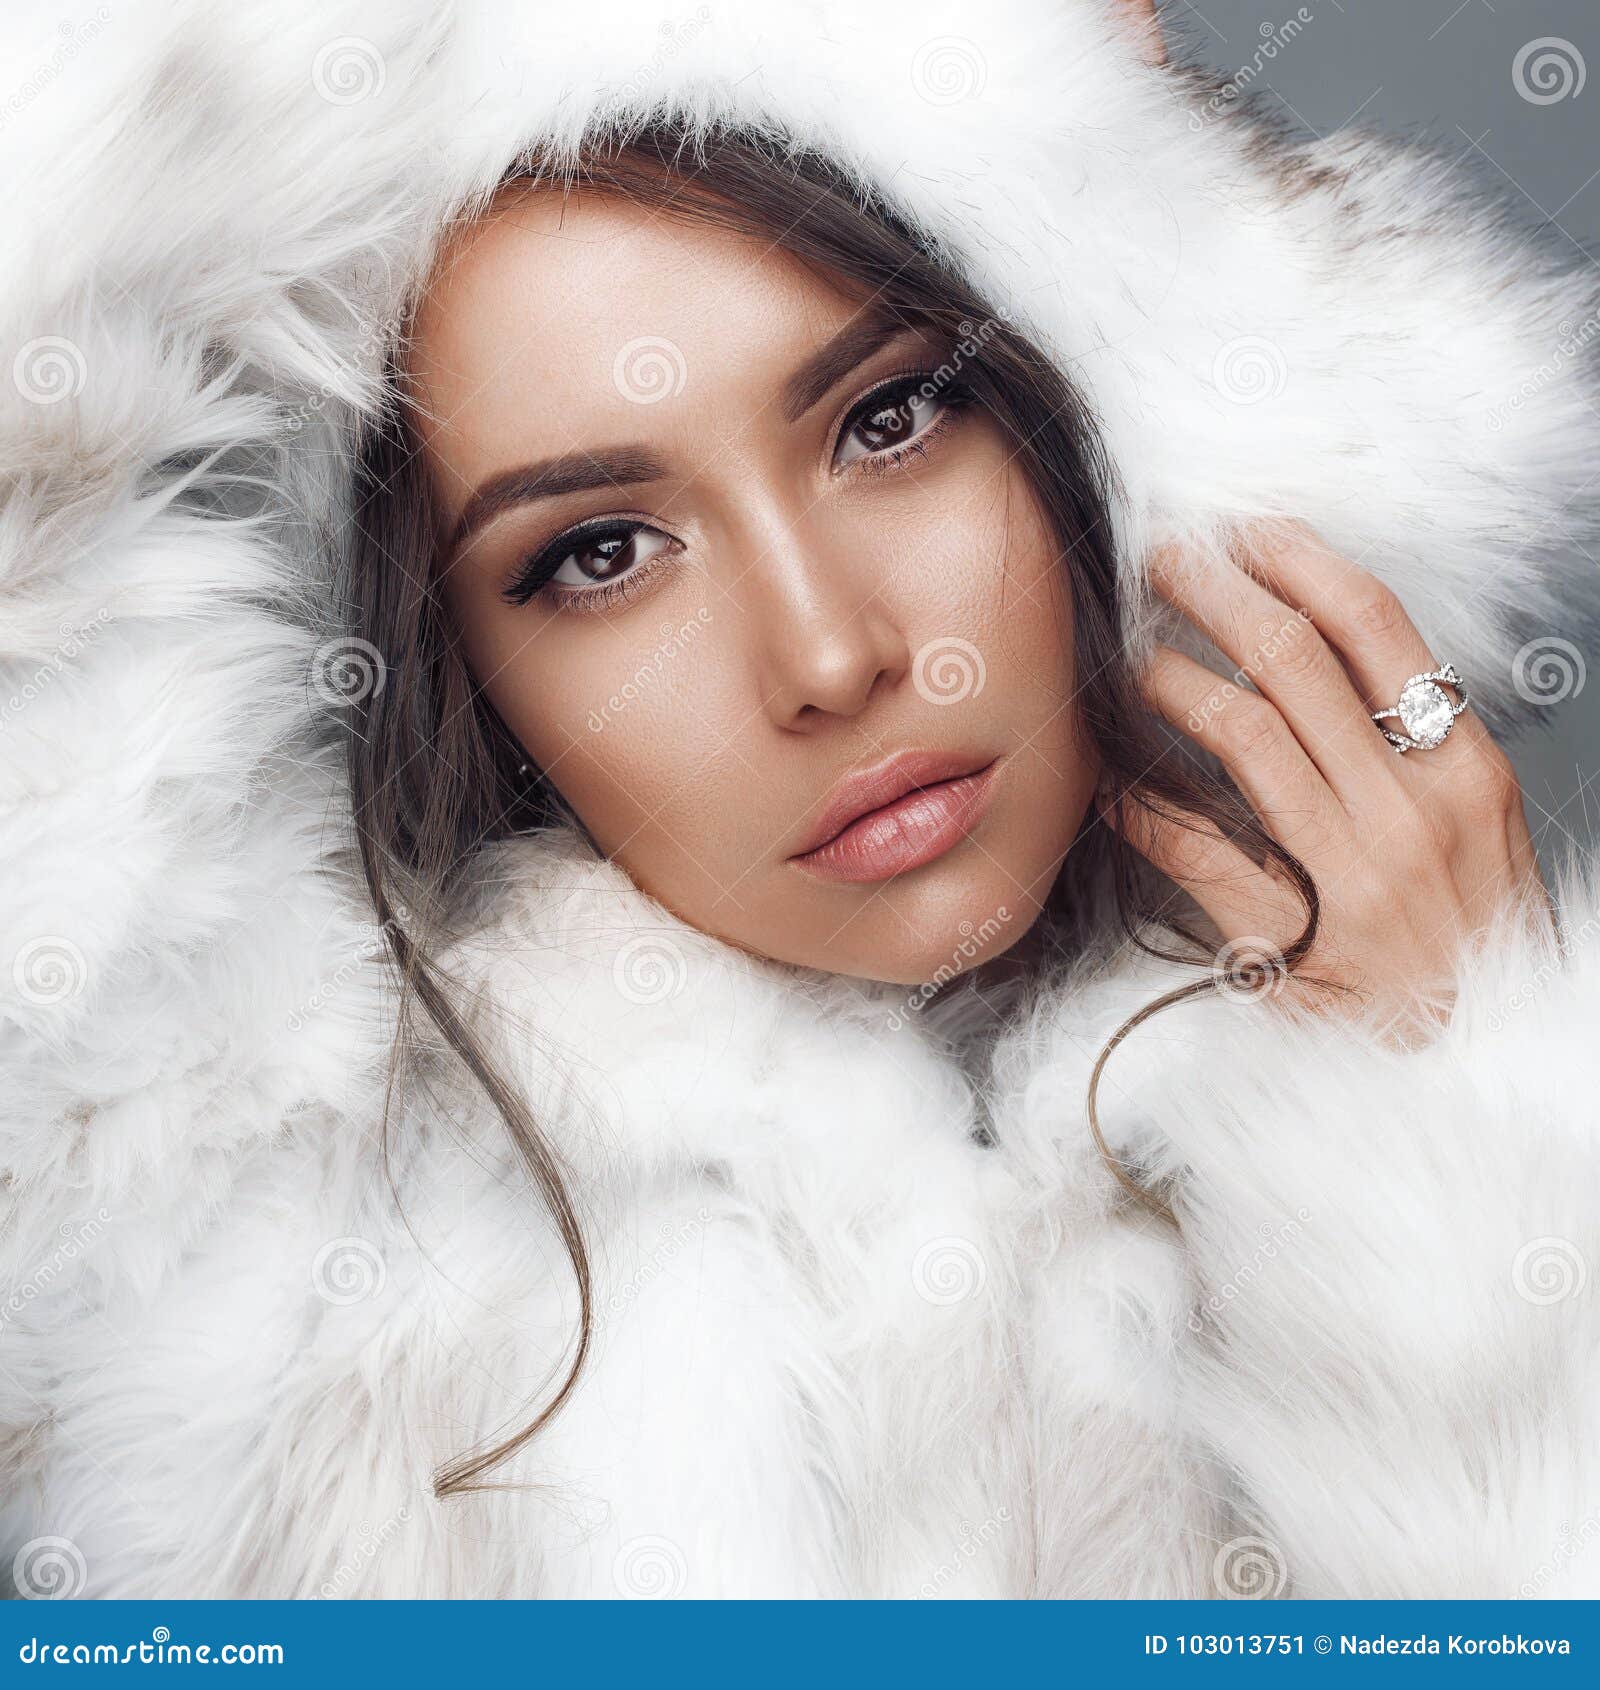 Beautiful Woman in White Fur Coat and Fur Hat Stock Image - Image of ...